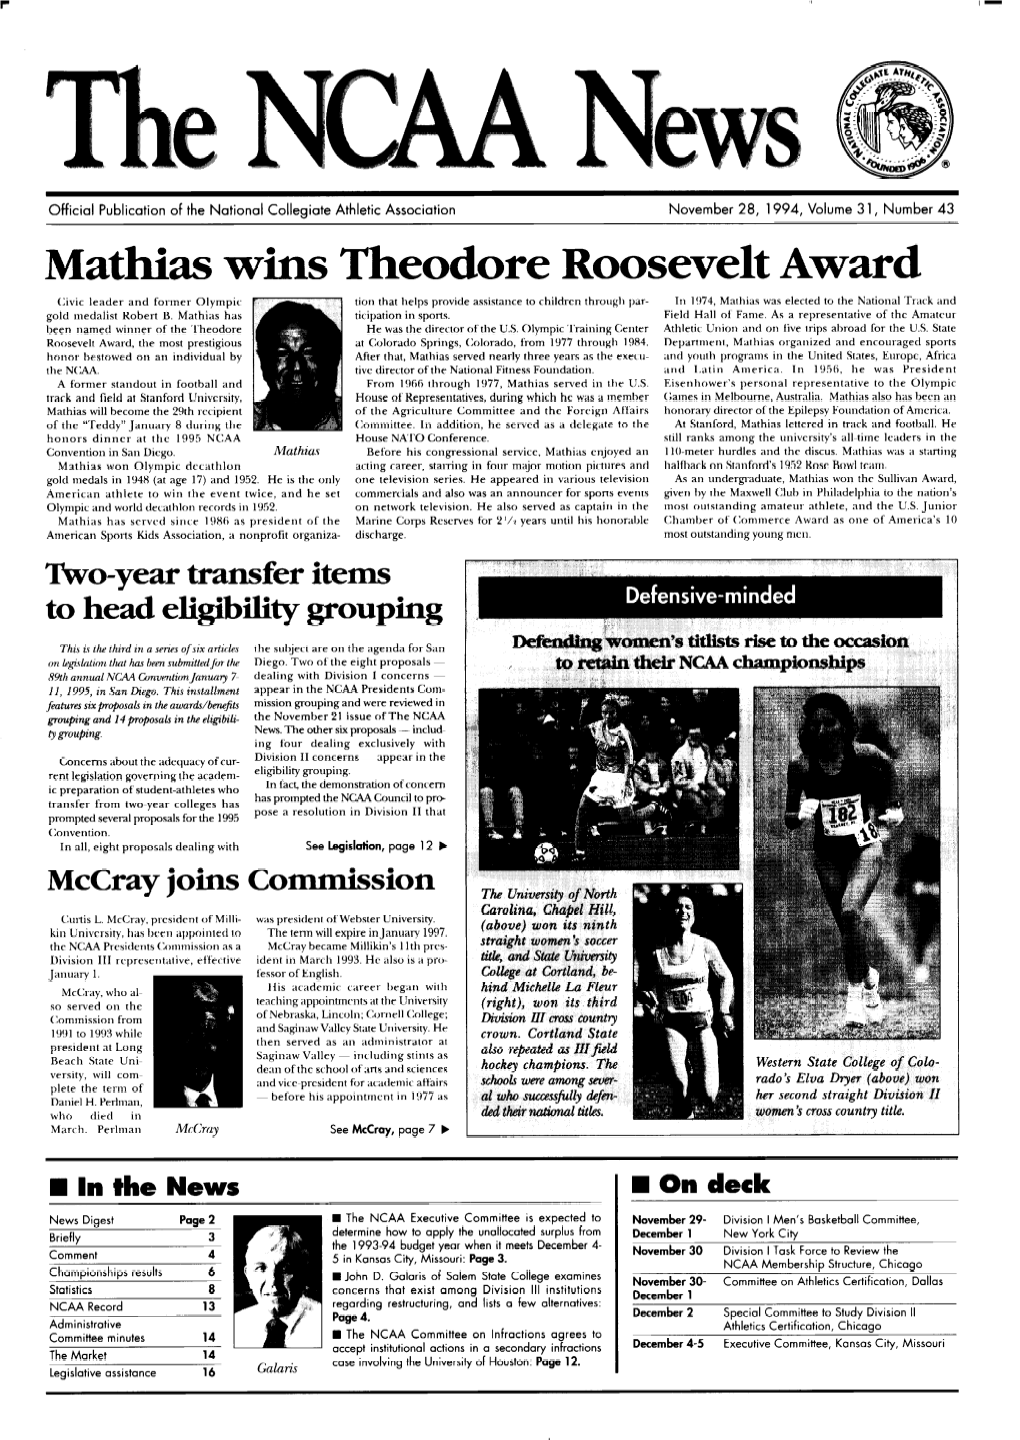 Mathias Wins Theodore Roosevelt Award